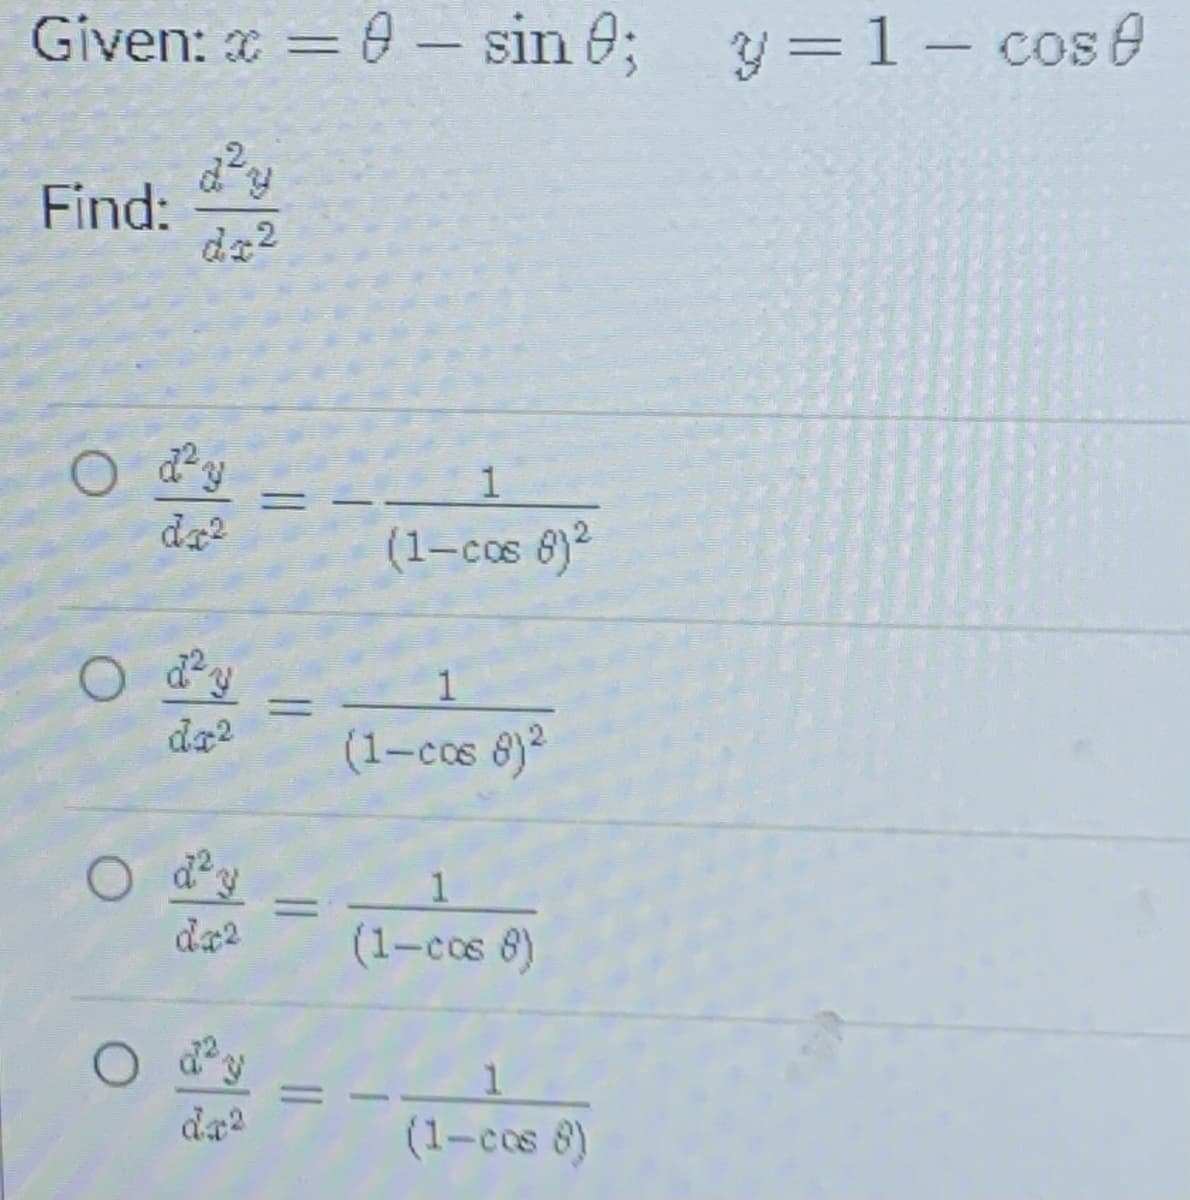 Given: = 0- sin e;
y=1- cose
Find:
dz2
da2
(1-cos 8)2
O dy
1
da2
(1-ccs 8)2
d'y
%3D
da2
(1-cos 8)
d y
da2
(1-cos 8)
